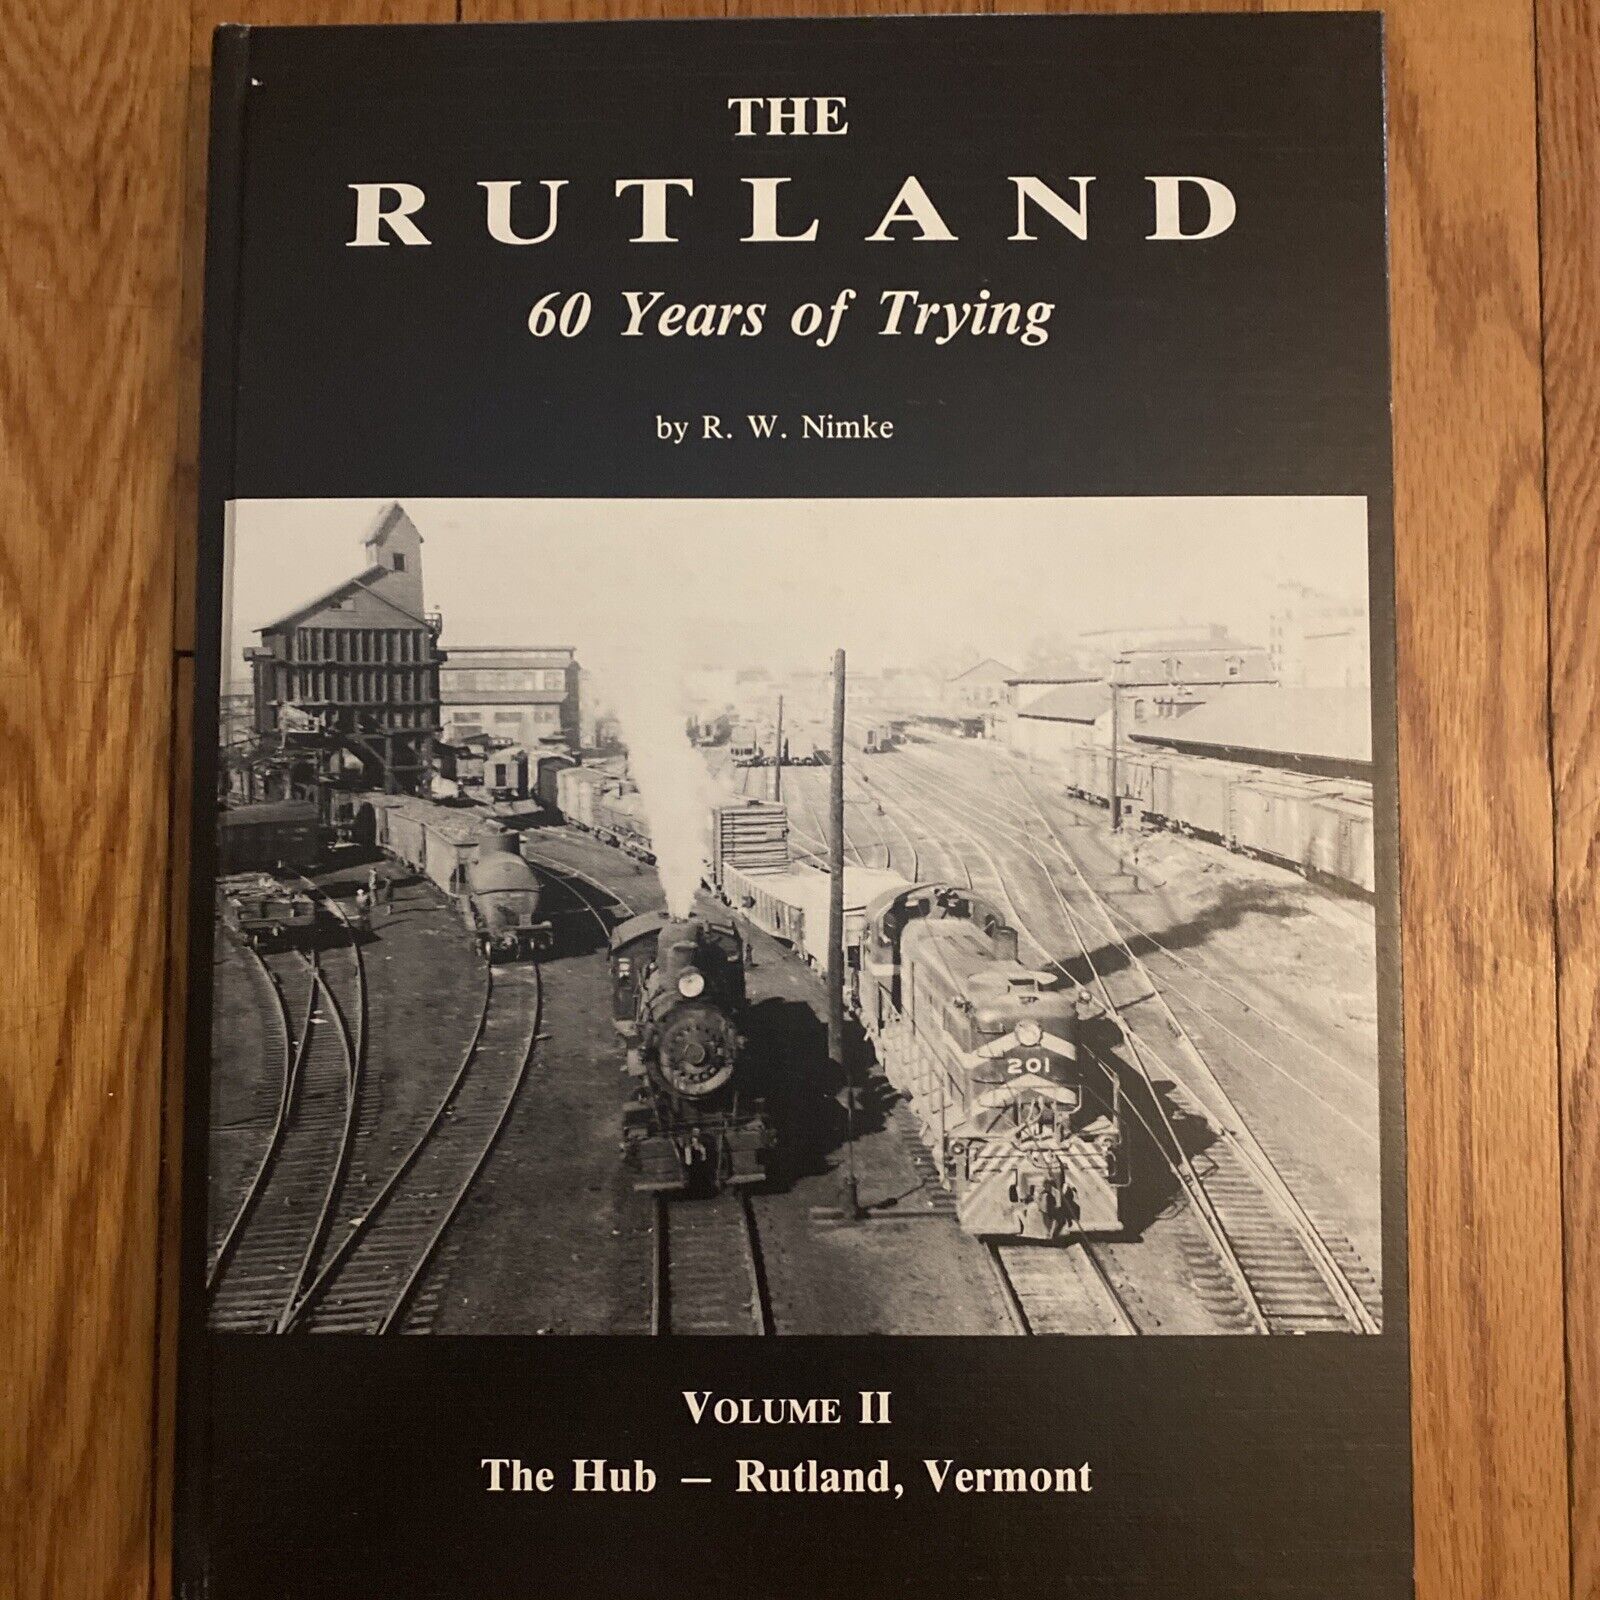 Rutland, The 60 Years of Trying Volume II The Hub Rutland, Vermont by R W Nimke